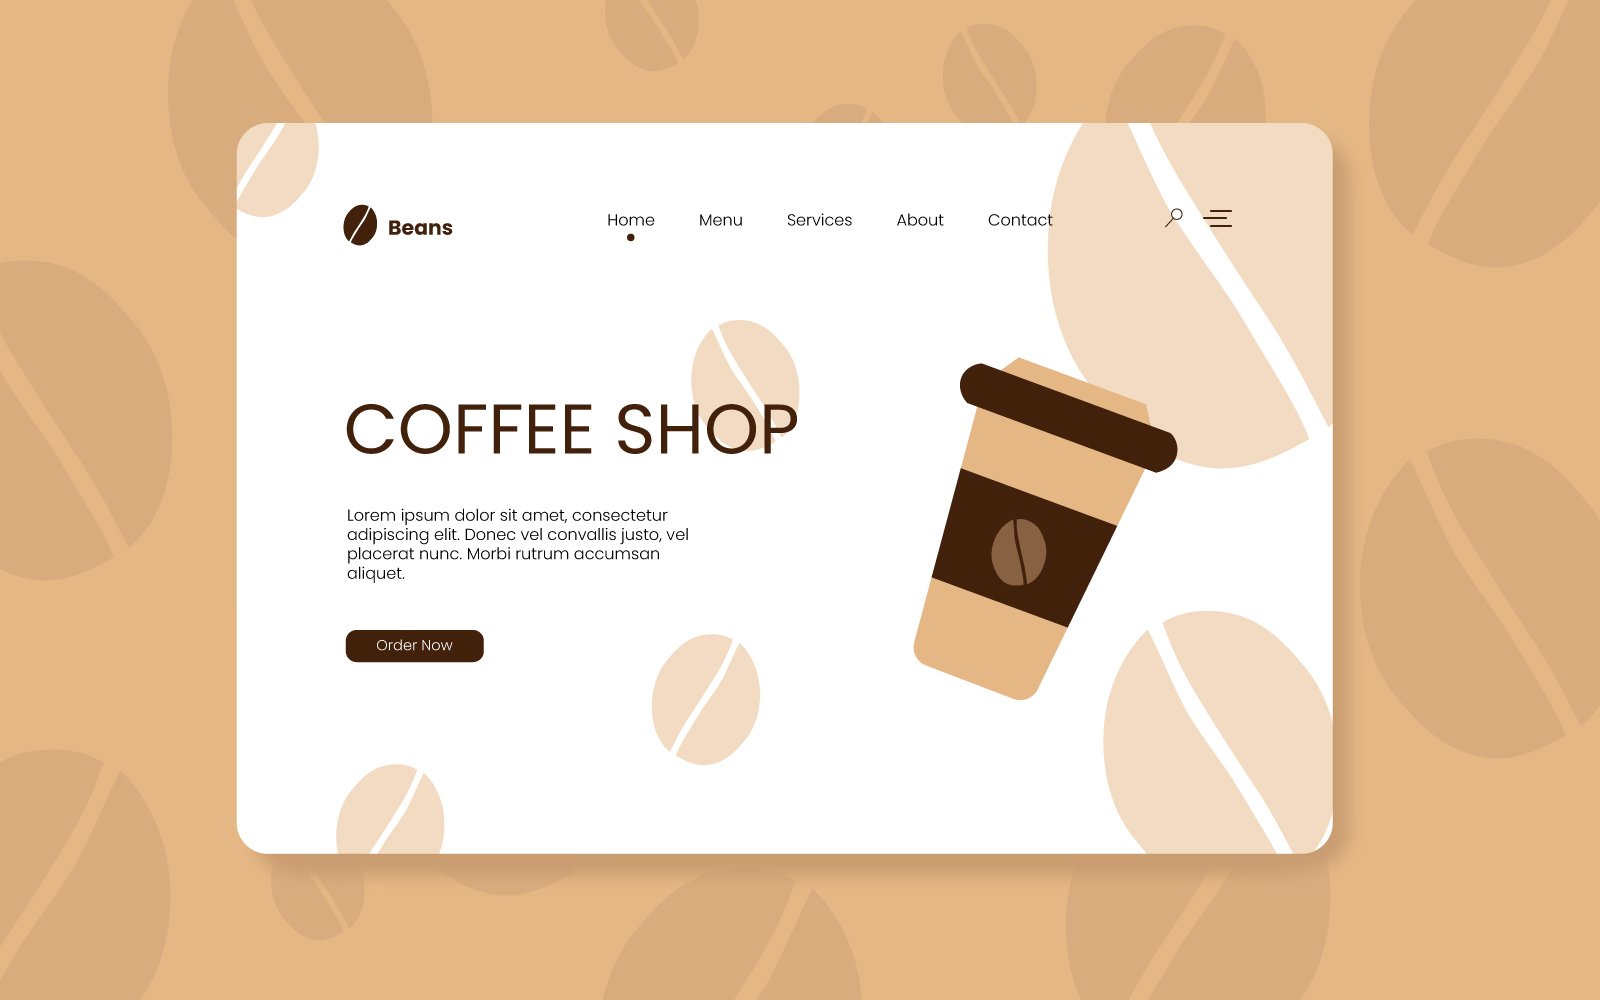 Coffee Shop Landing Page Design - Vector Image